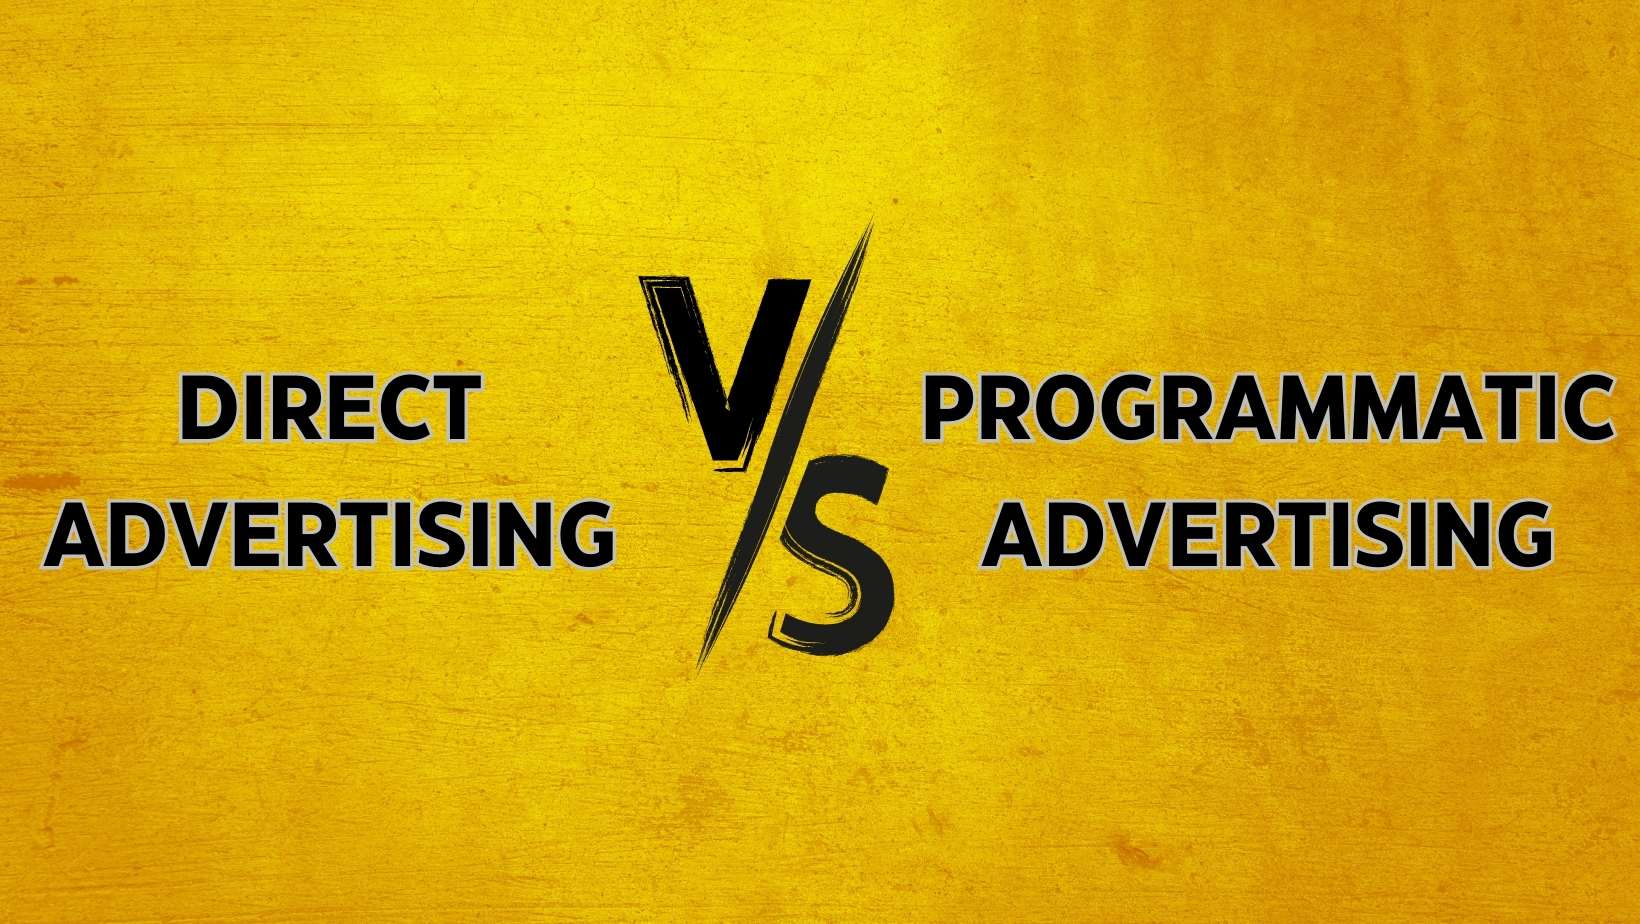 DIRECT ADVERTISING vs programmatic advertising